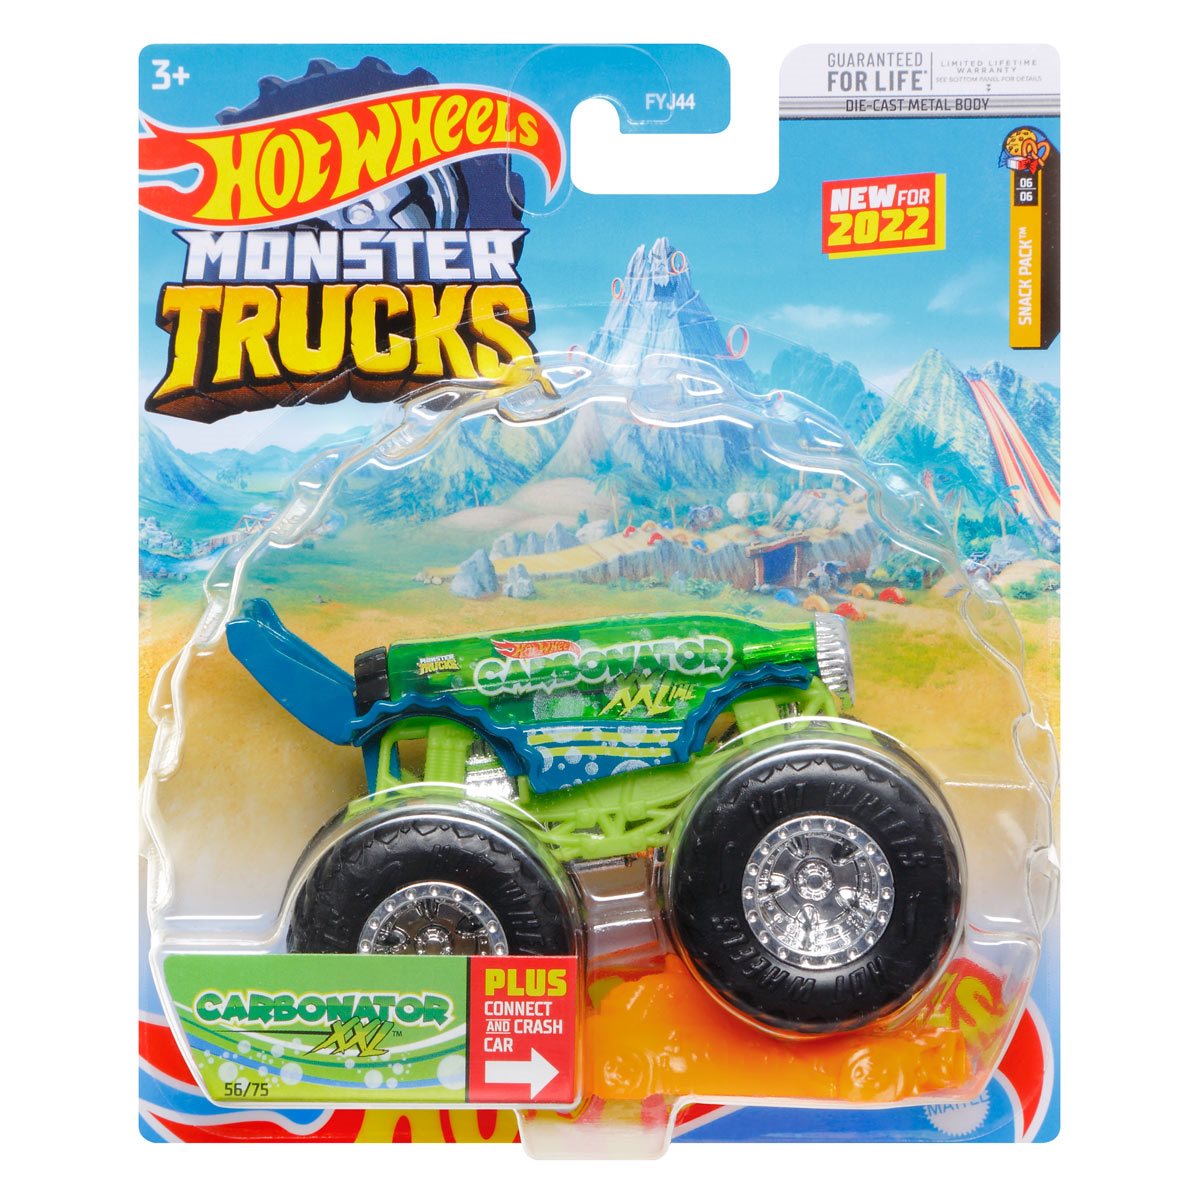  Hot Wheeels Monster Trucks Oversized Torque Terror